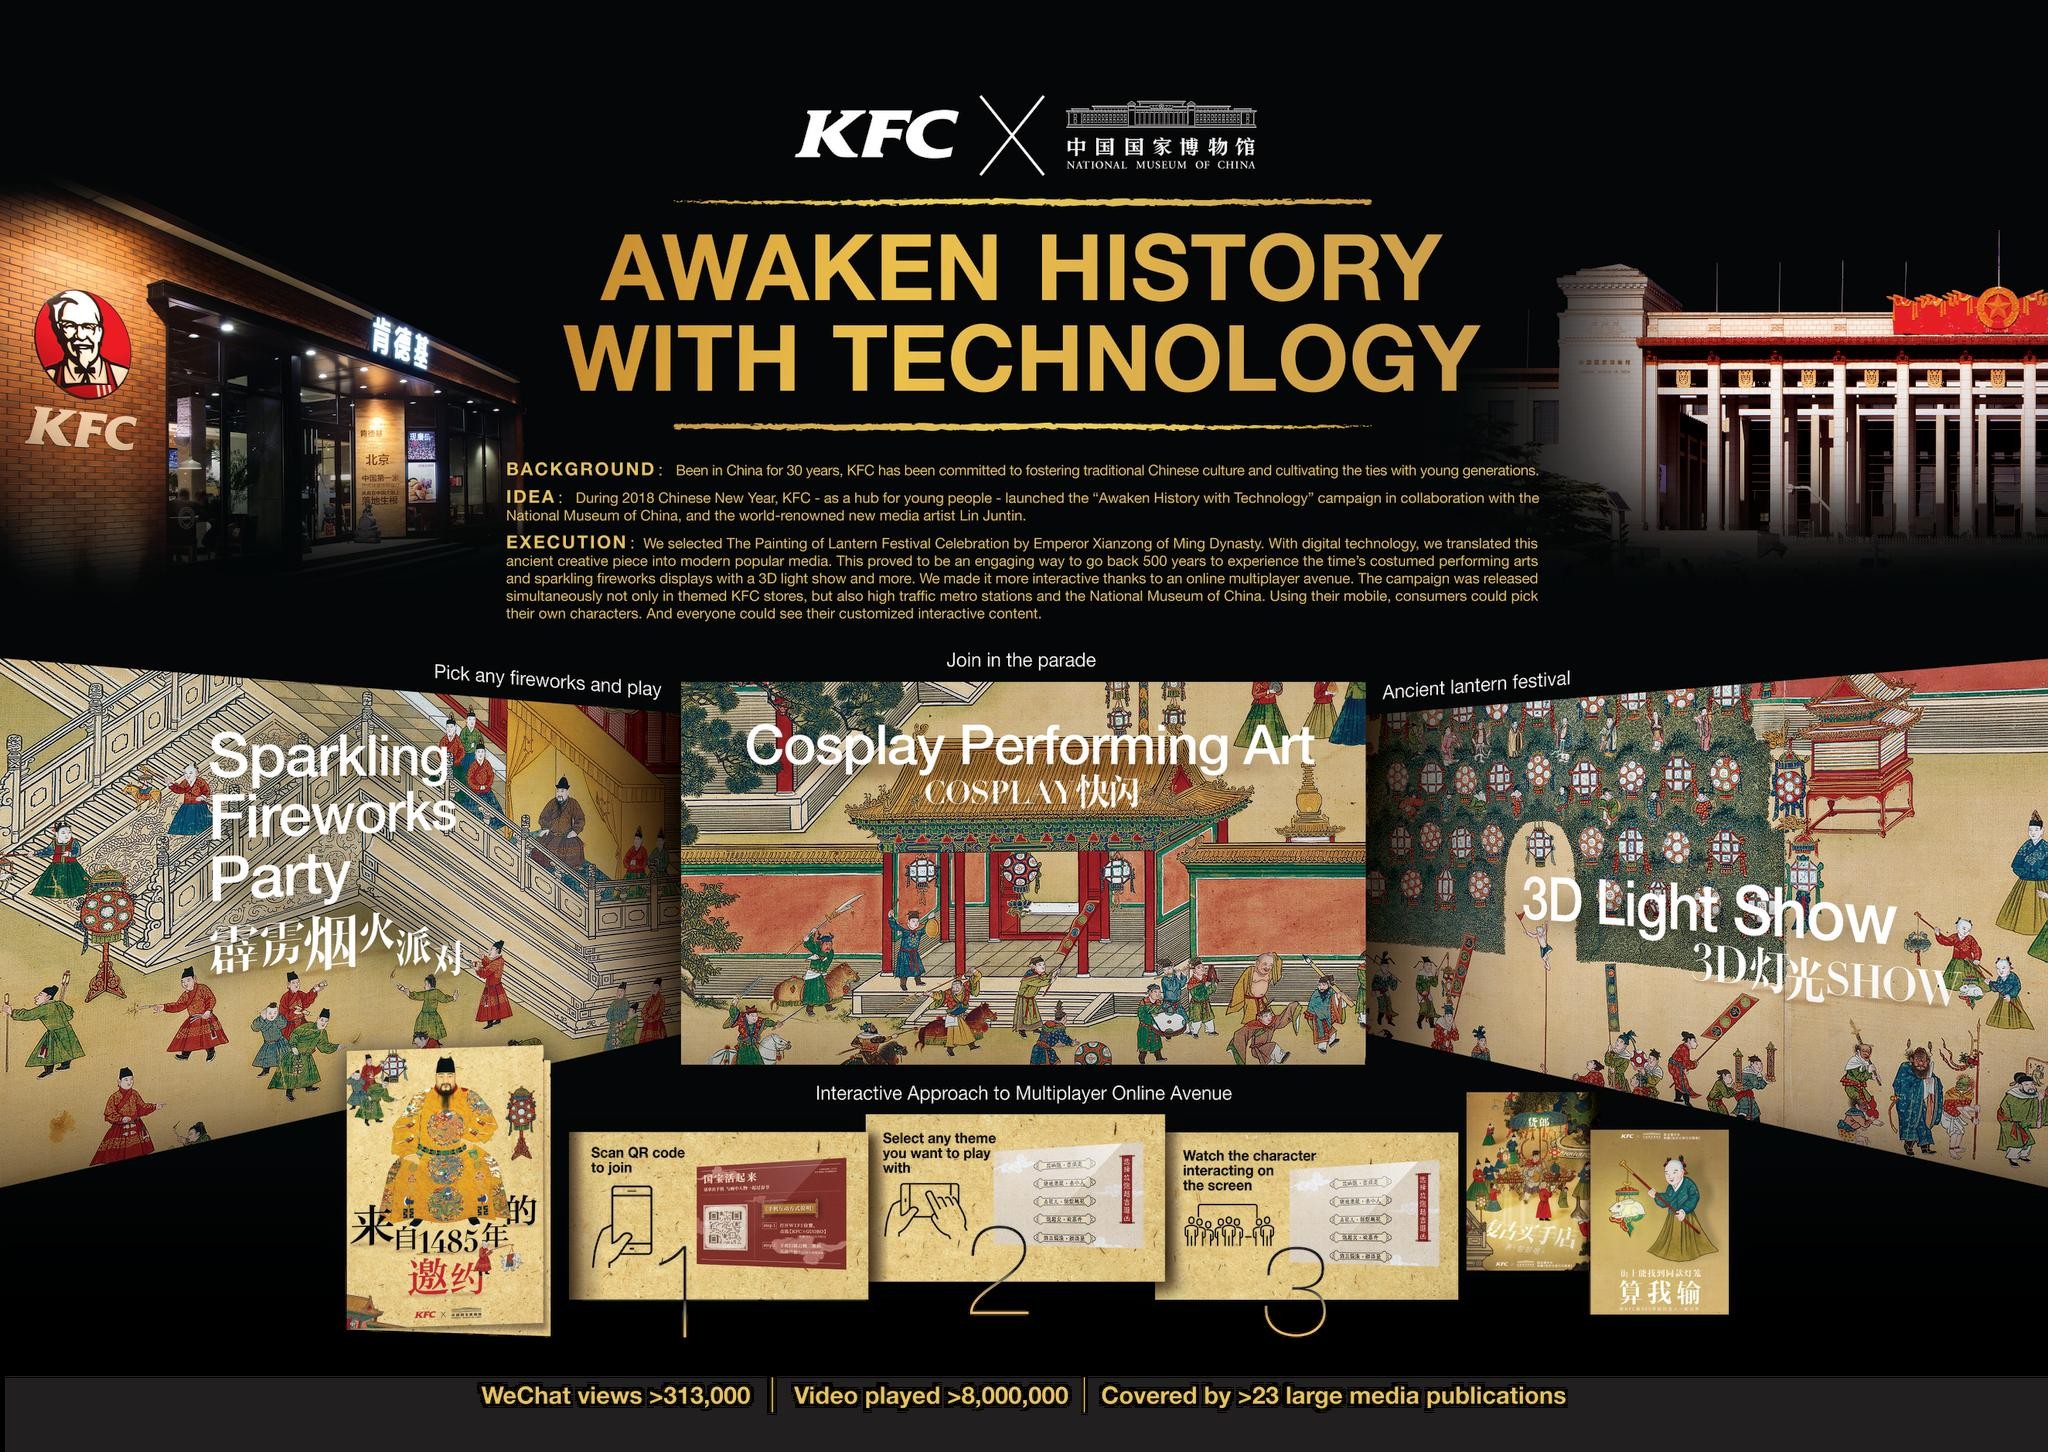 KFC – Awaken History with Technology